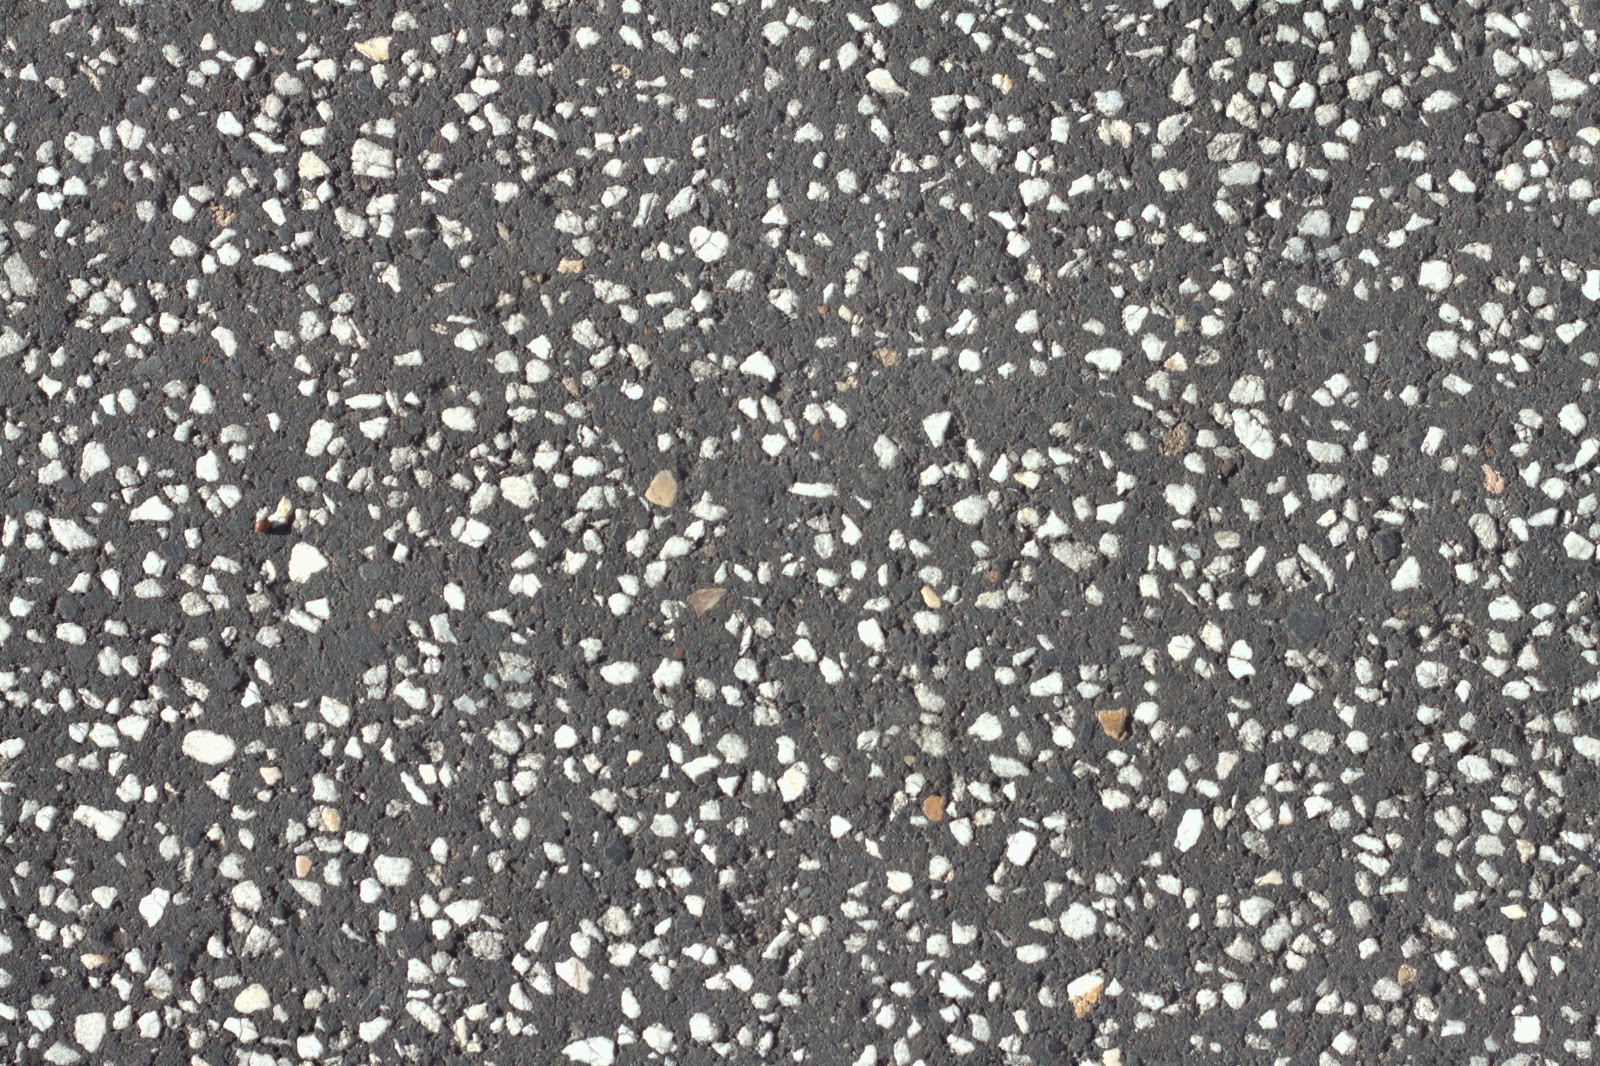 Concrete floor with white pebbles texture 4770x3178